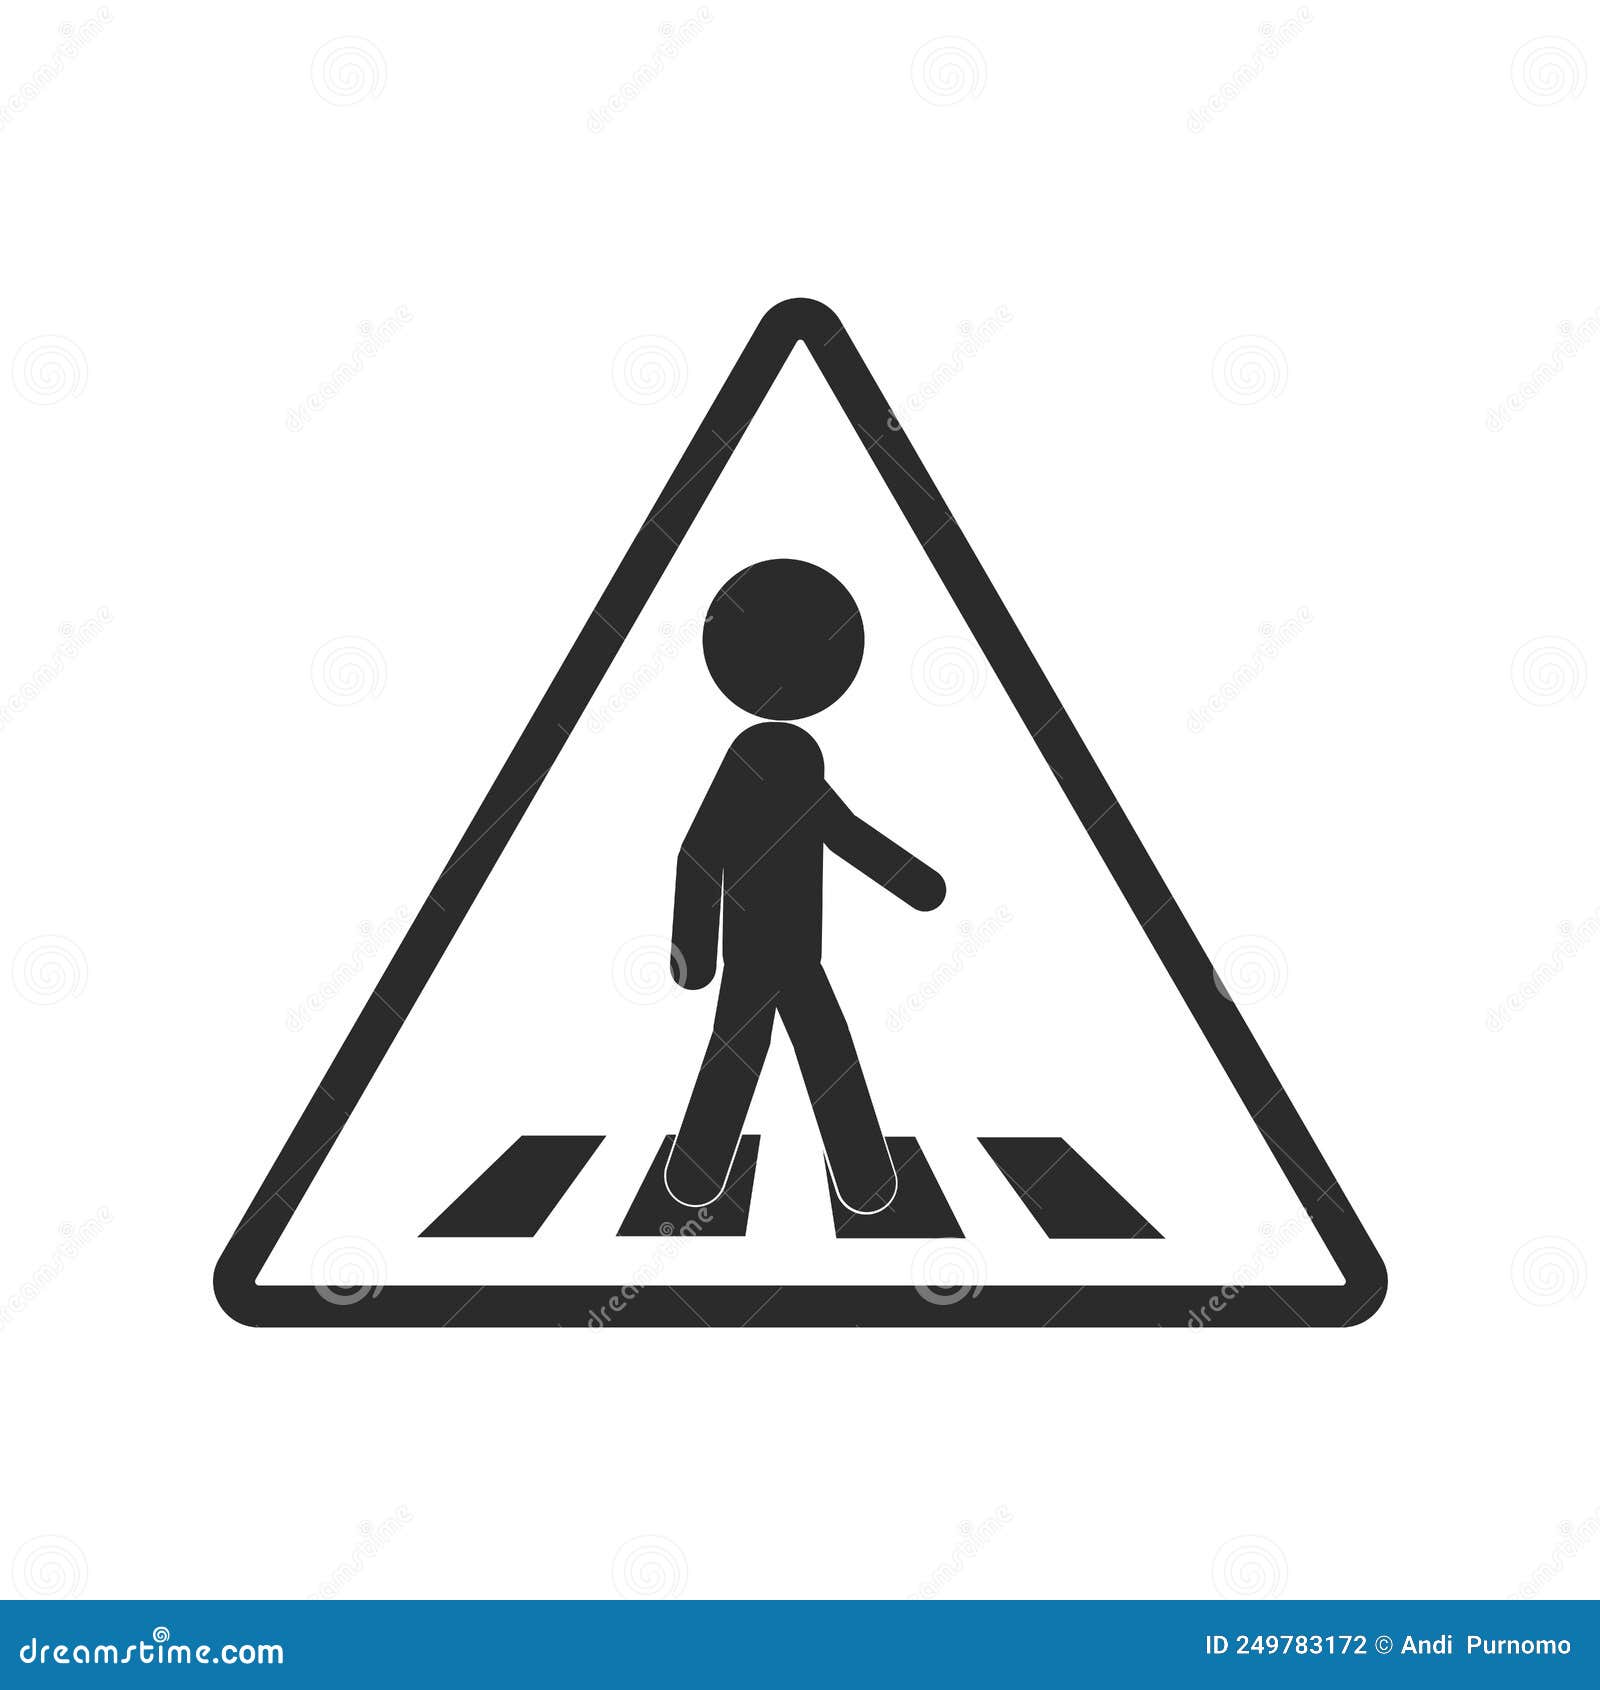 Pedestrian Crossing Sign Clip Art at  - vector clip art